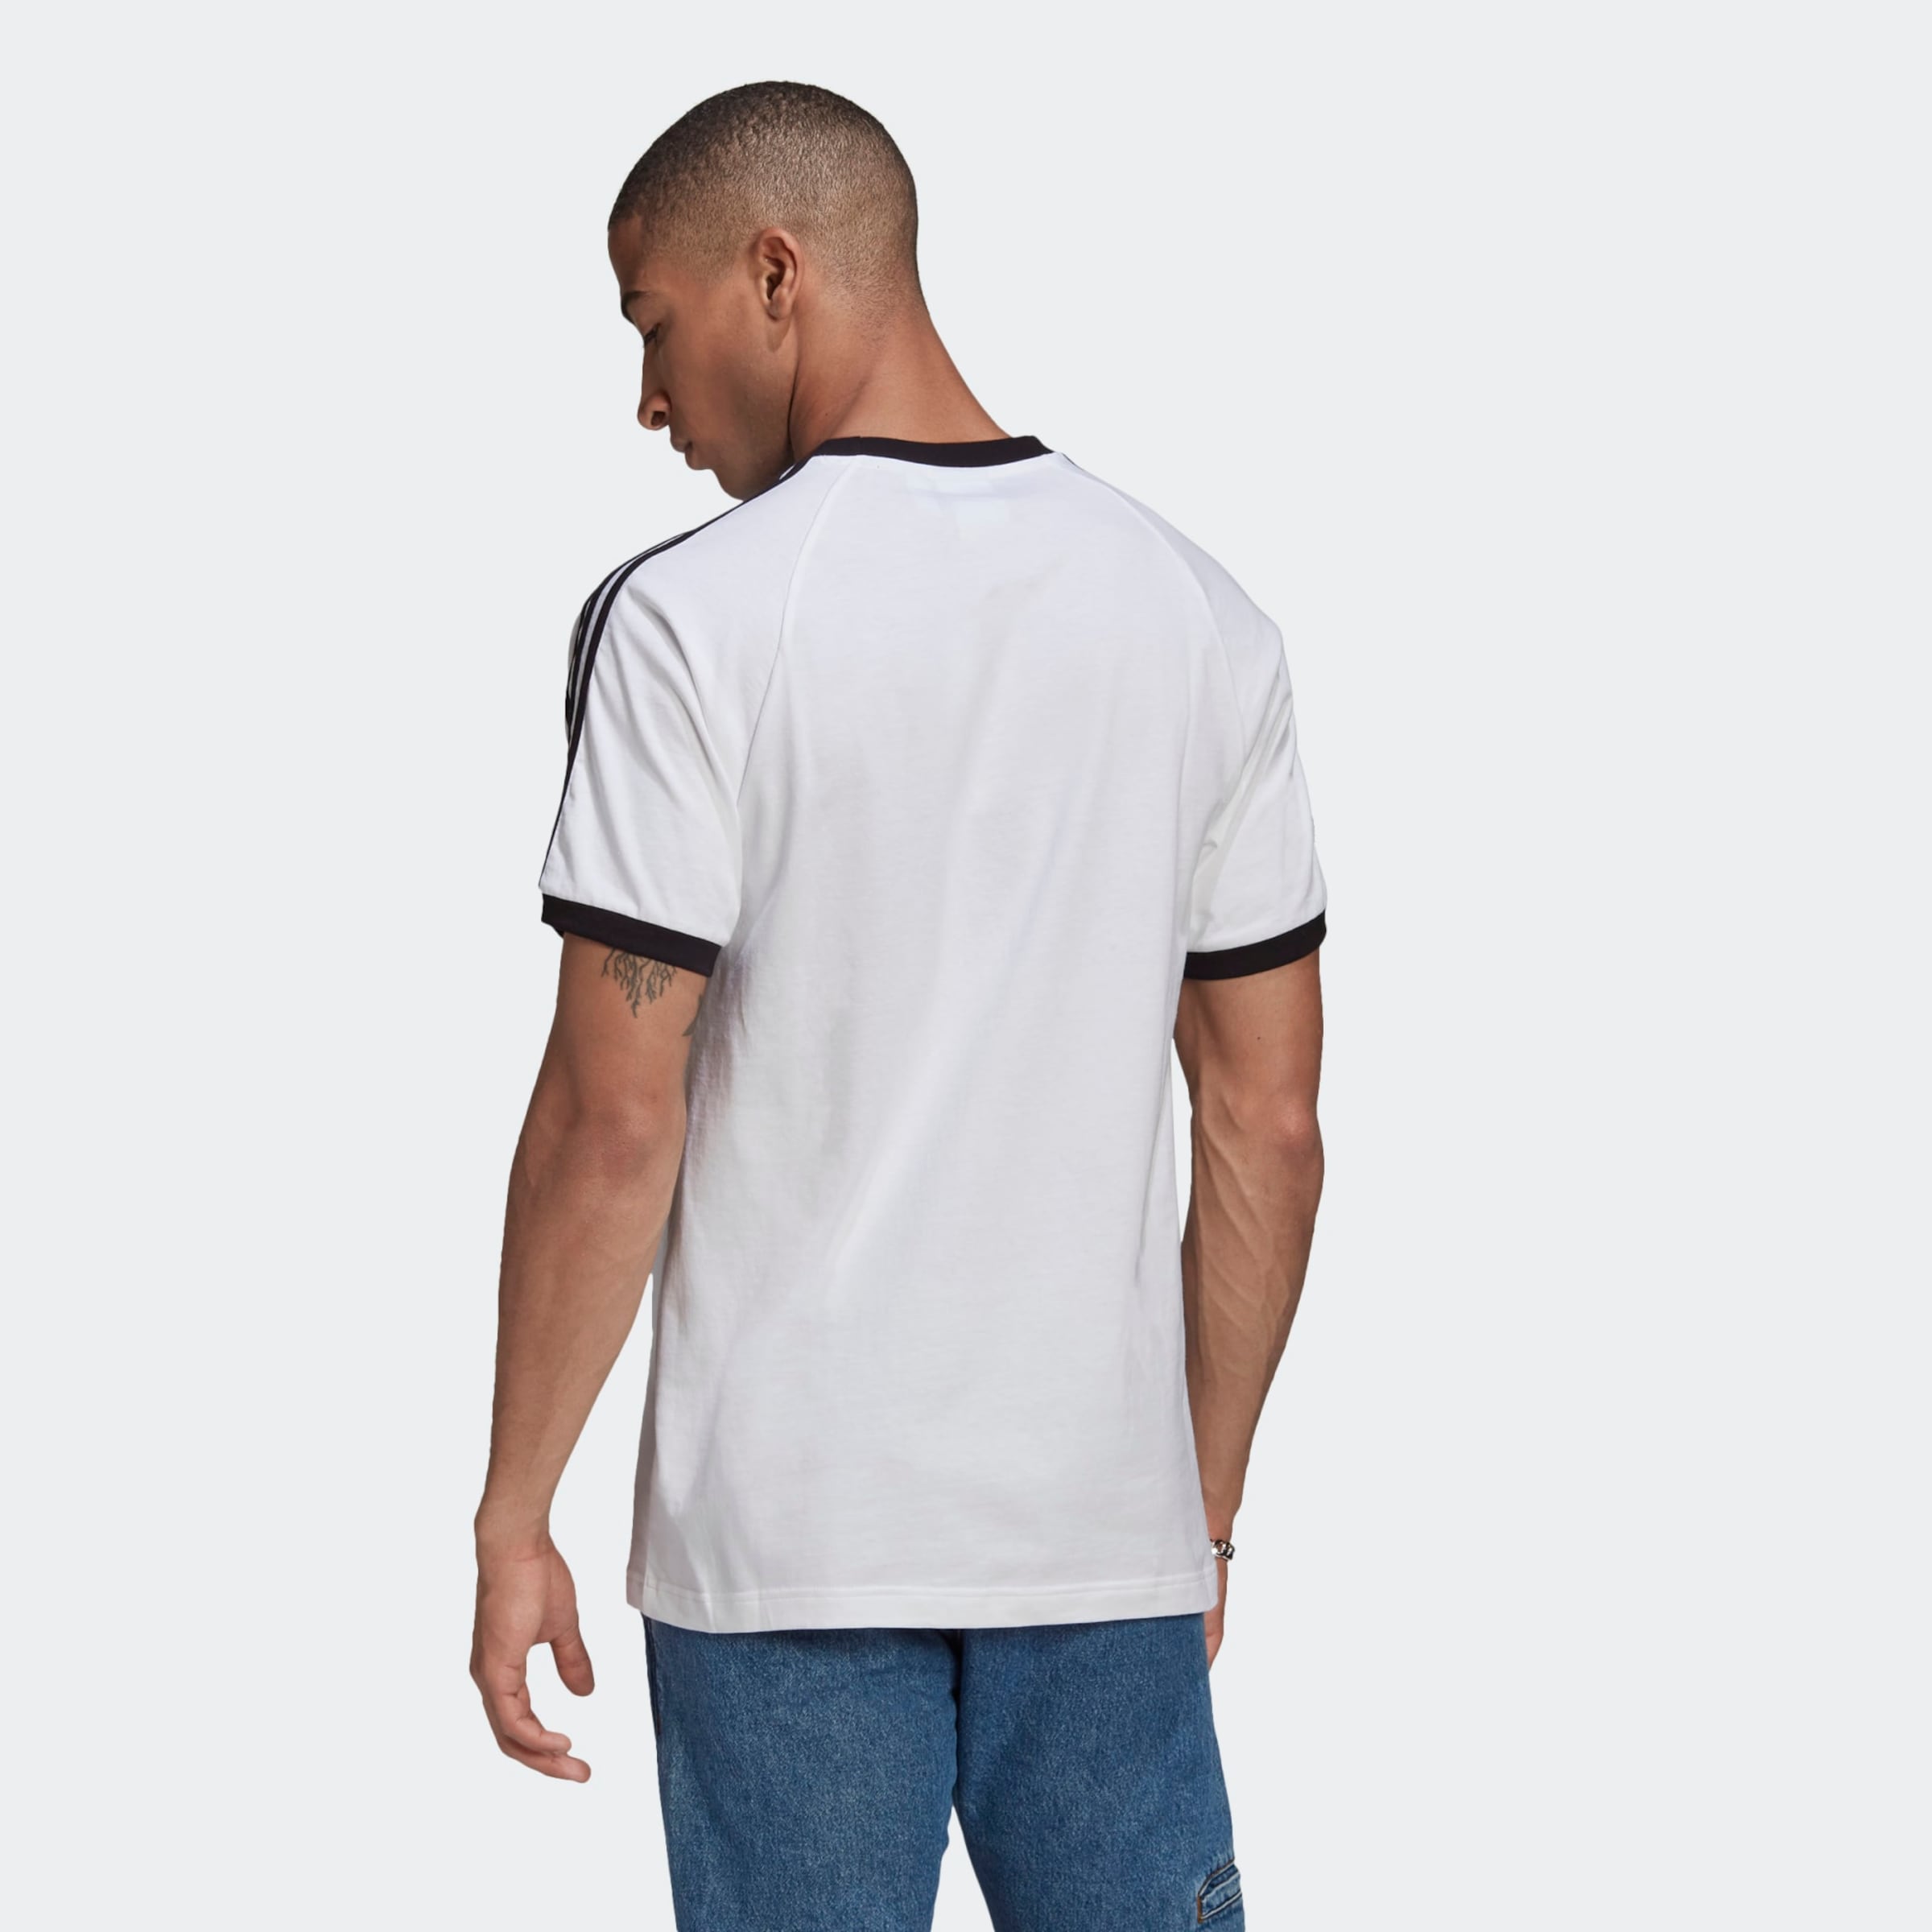 Männer Shirts ADIDAS ORIGINALS T-Shirt in Weiß - QJ11304